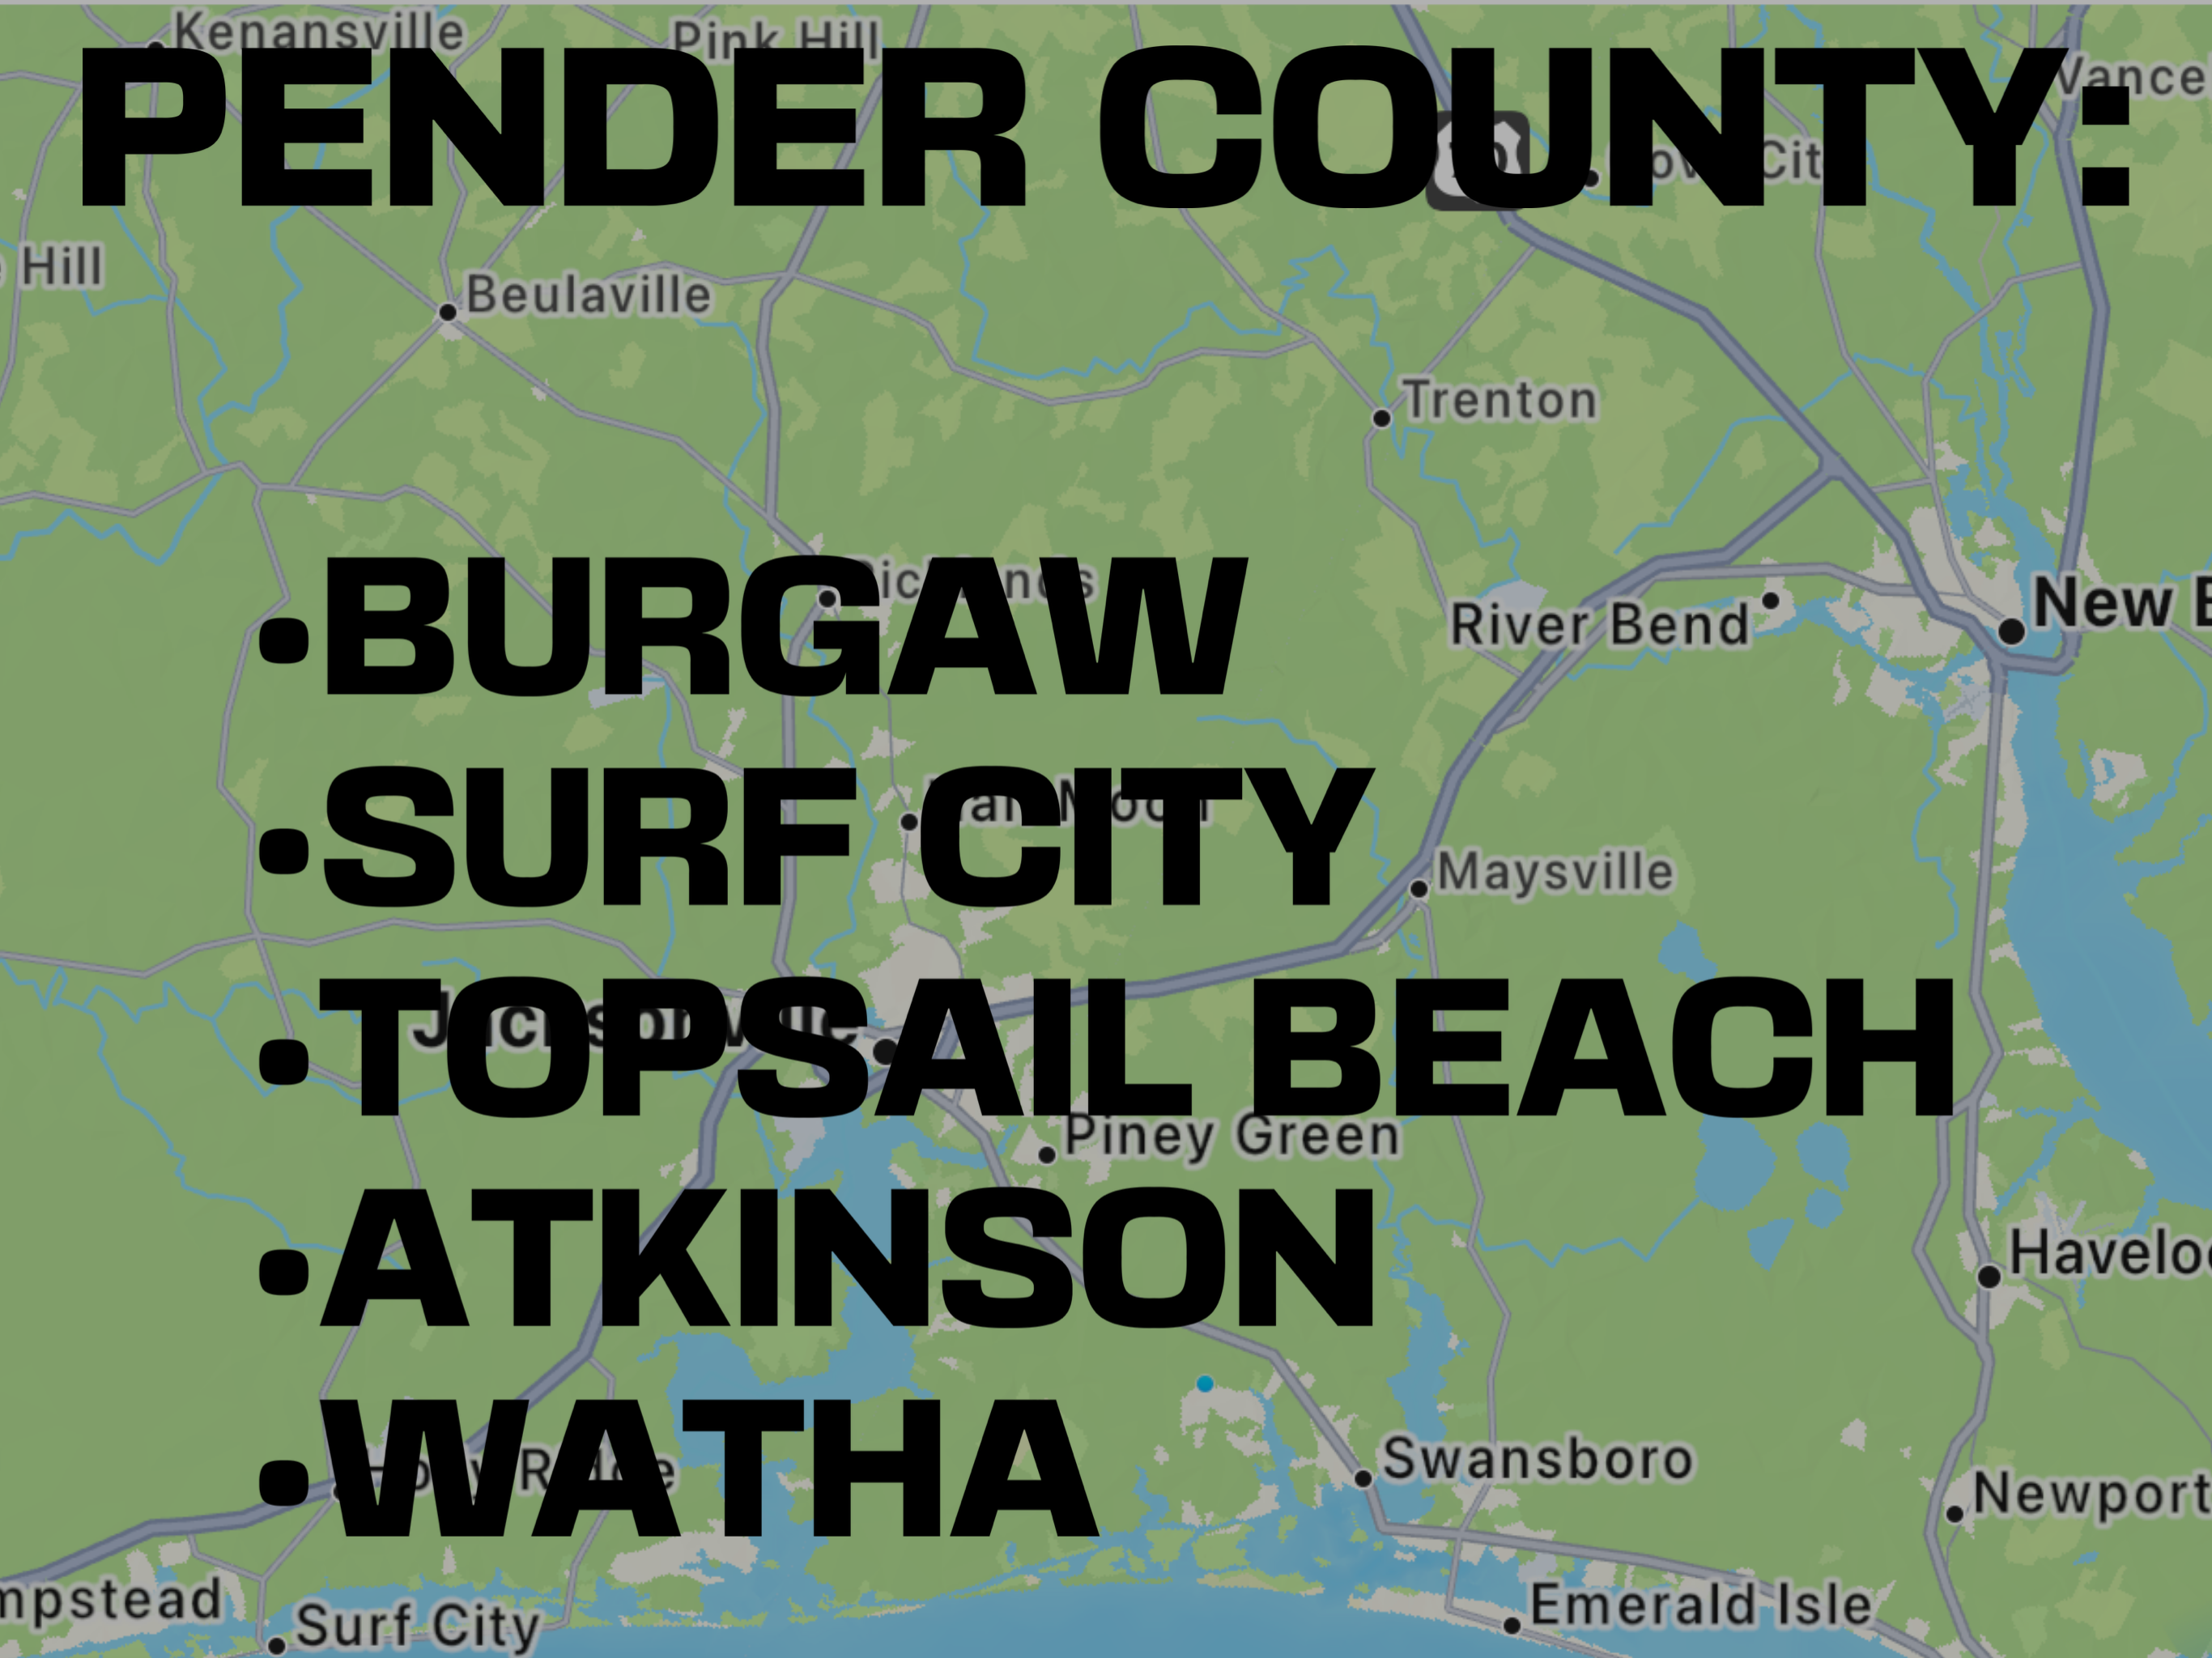 Carolina EartHWerx serves pender county North Carolina which consists of burgaw, surf city, topsail beach, Atkinson, and watha.